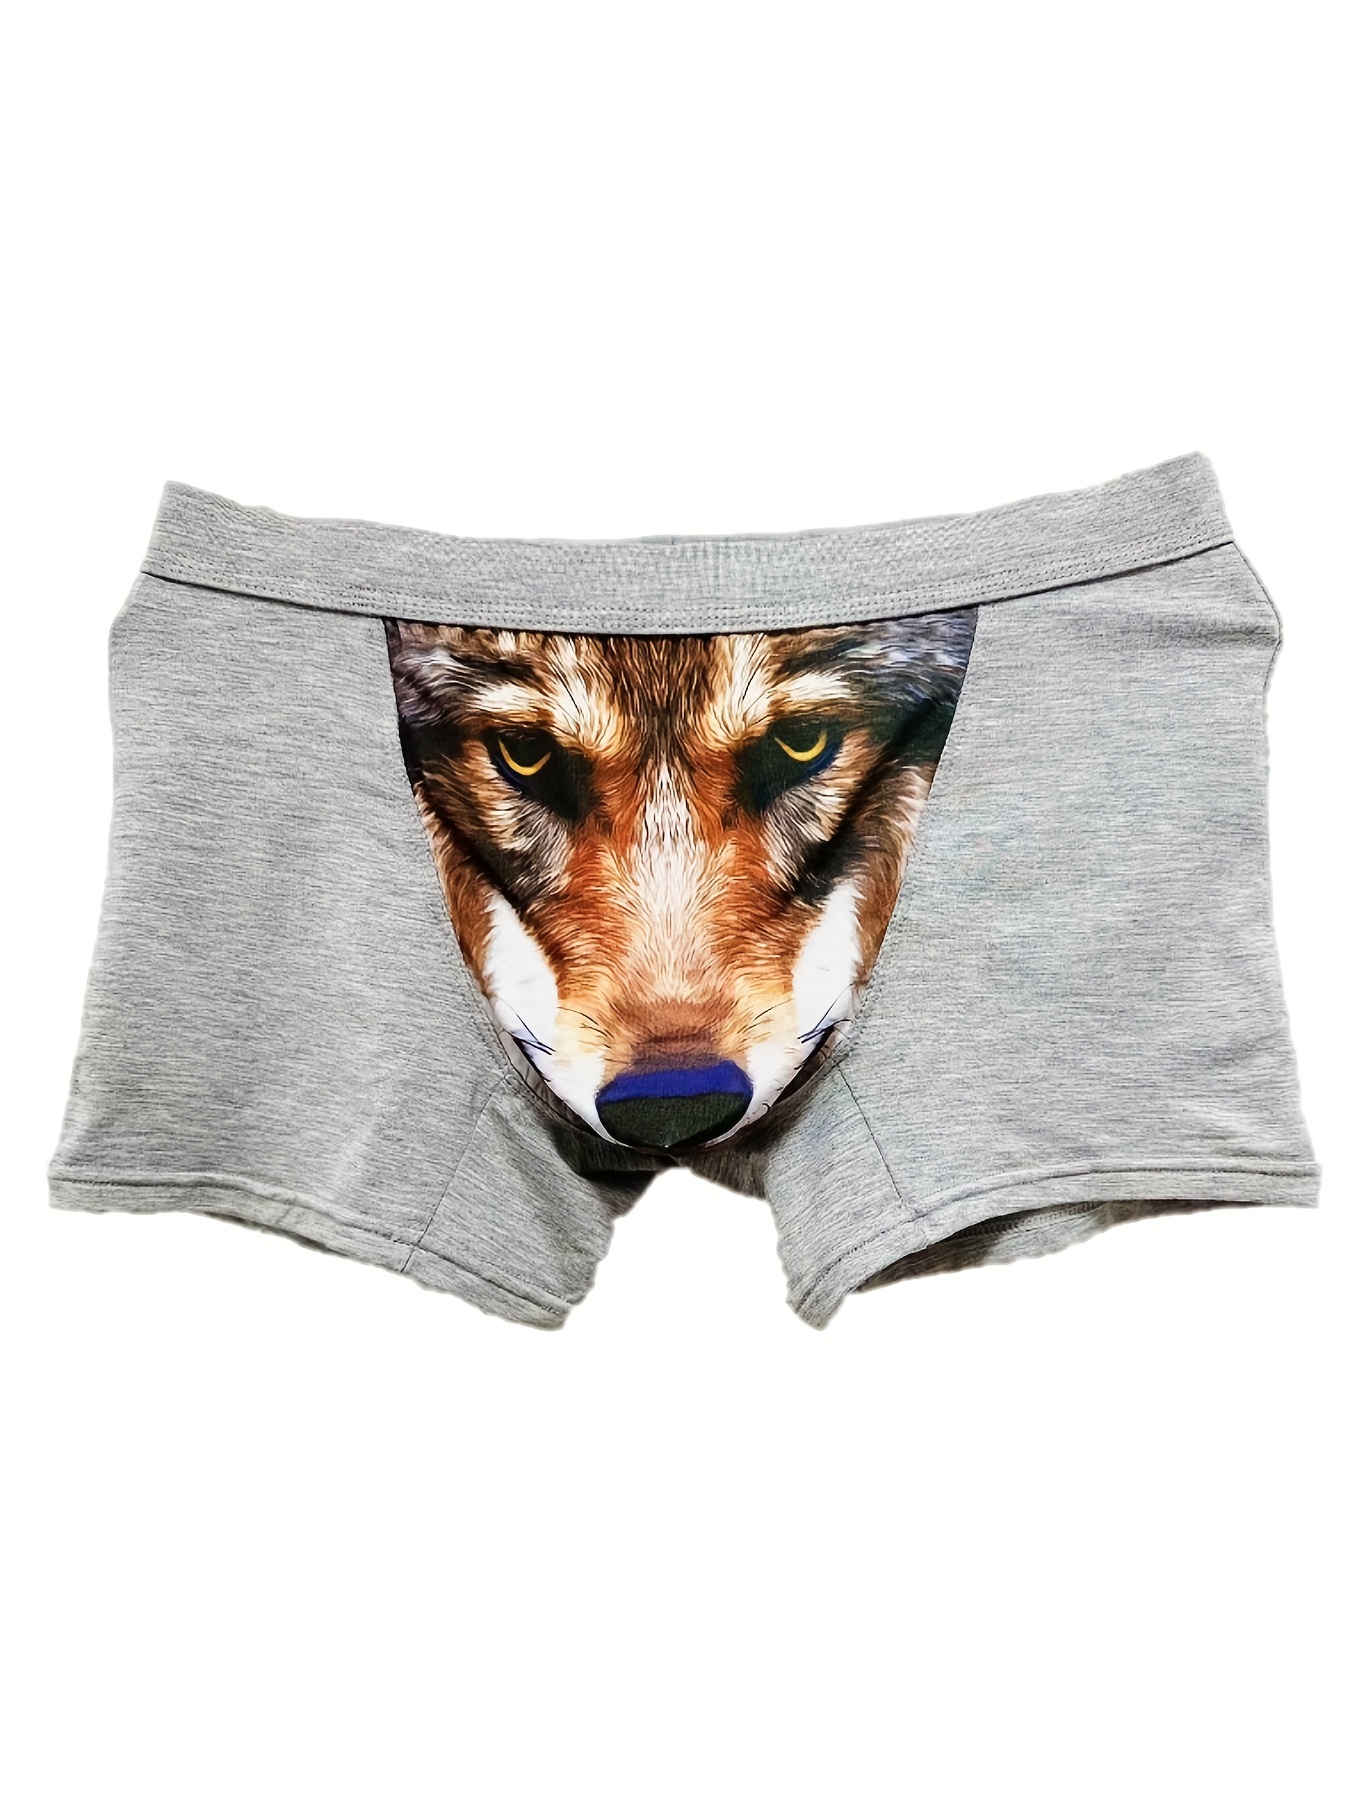 Space Galaxy Wolf Underpants Cotton Panties Man Underwear Sexy